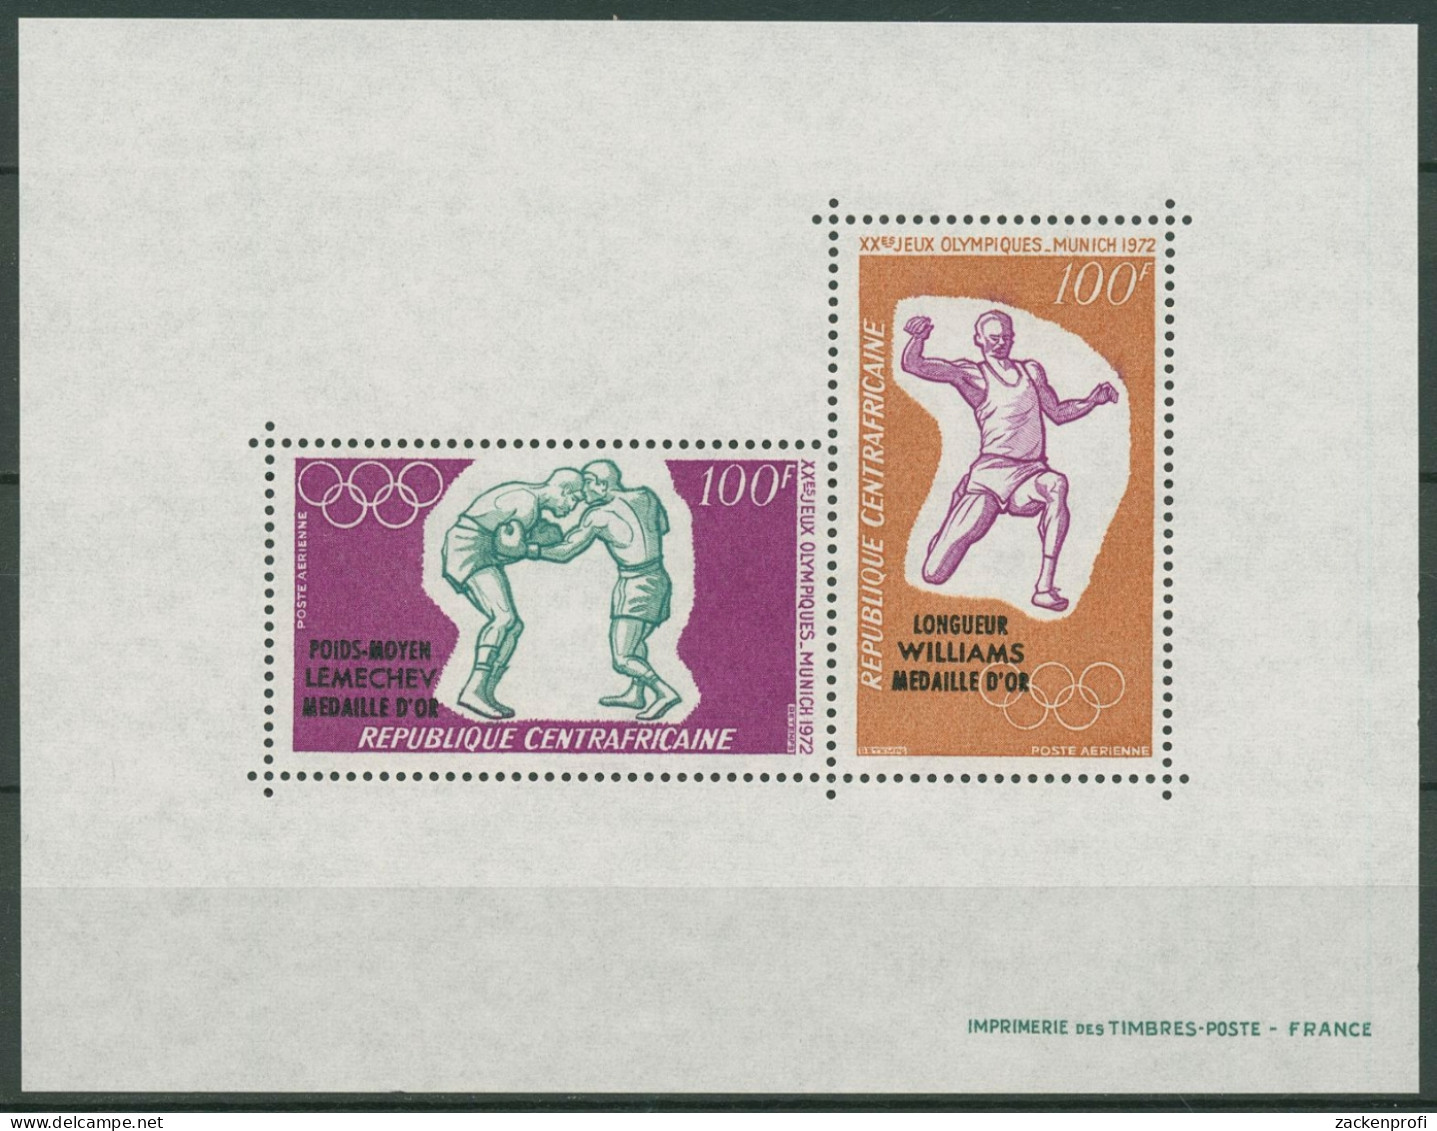 Zentralafrikanische Republik 1972 Gold Olymp. München Block 8 Postfrisch (C29674) - Central African Republic